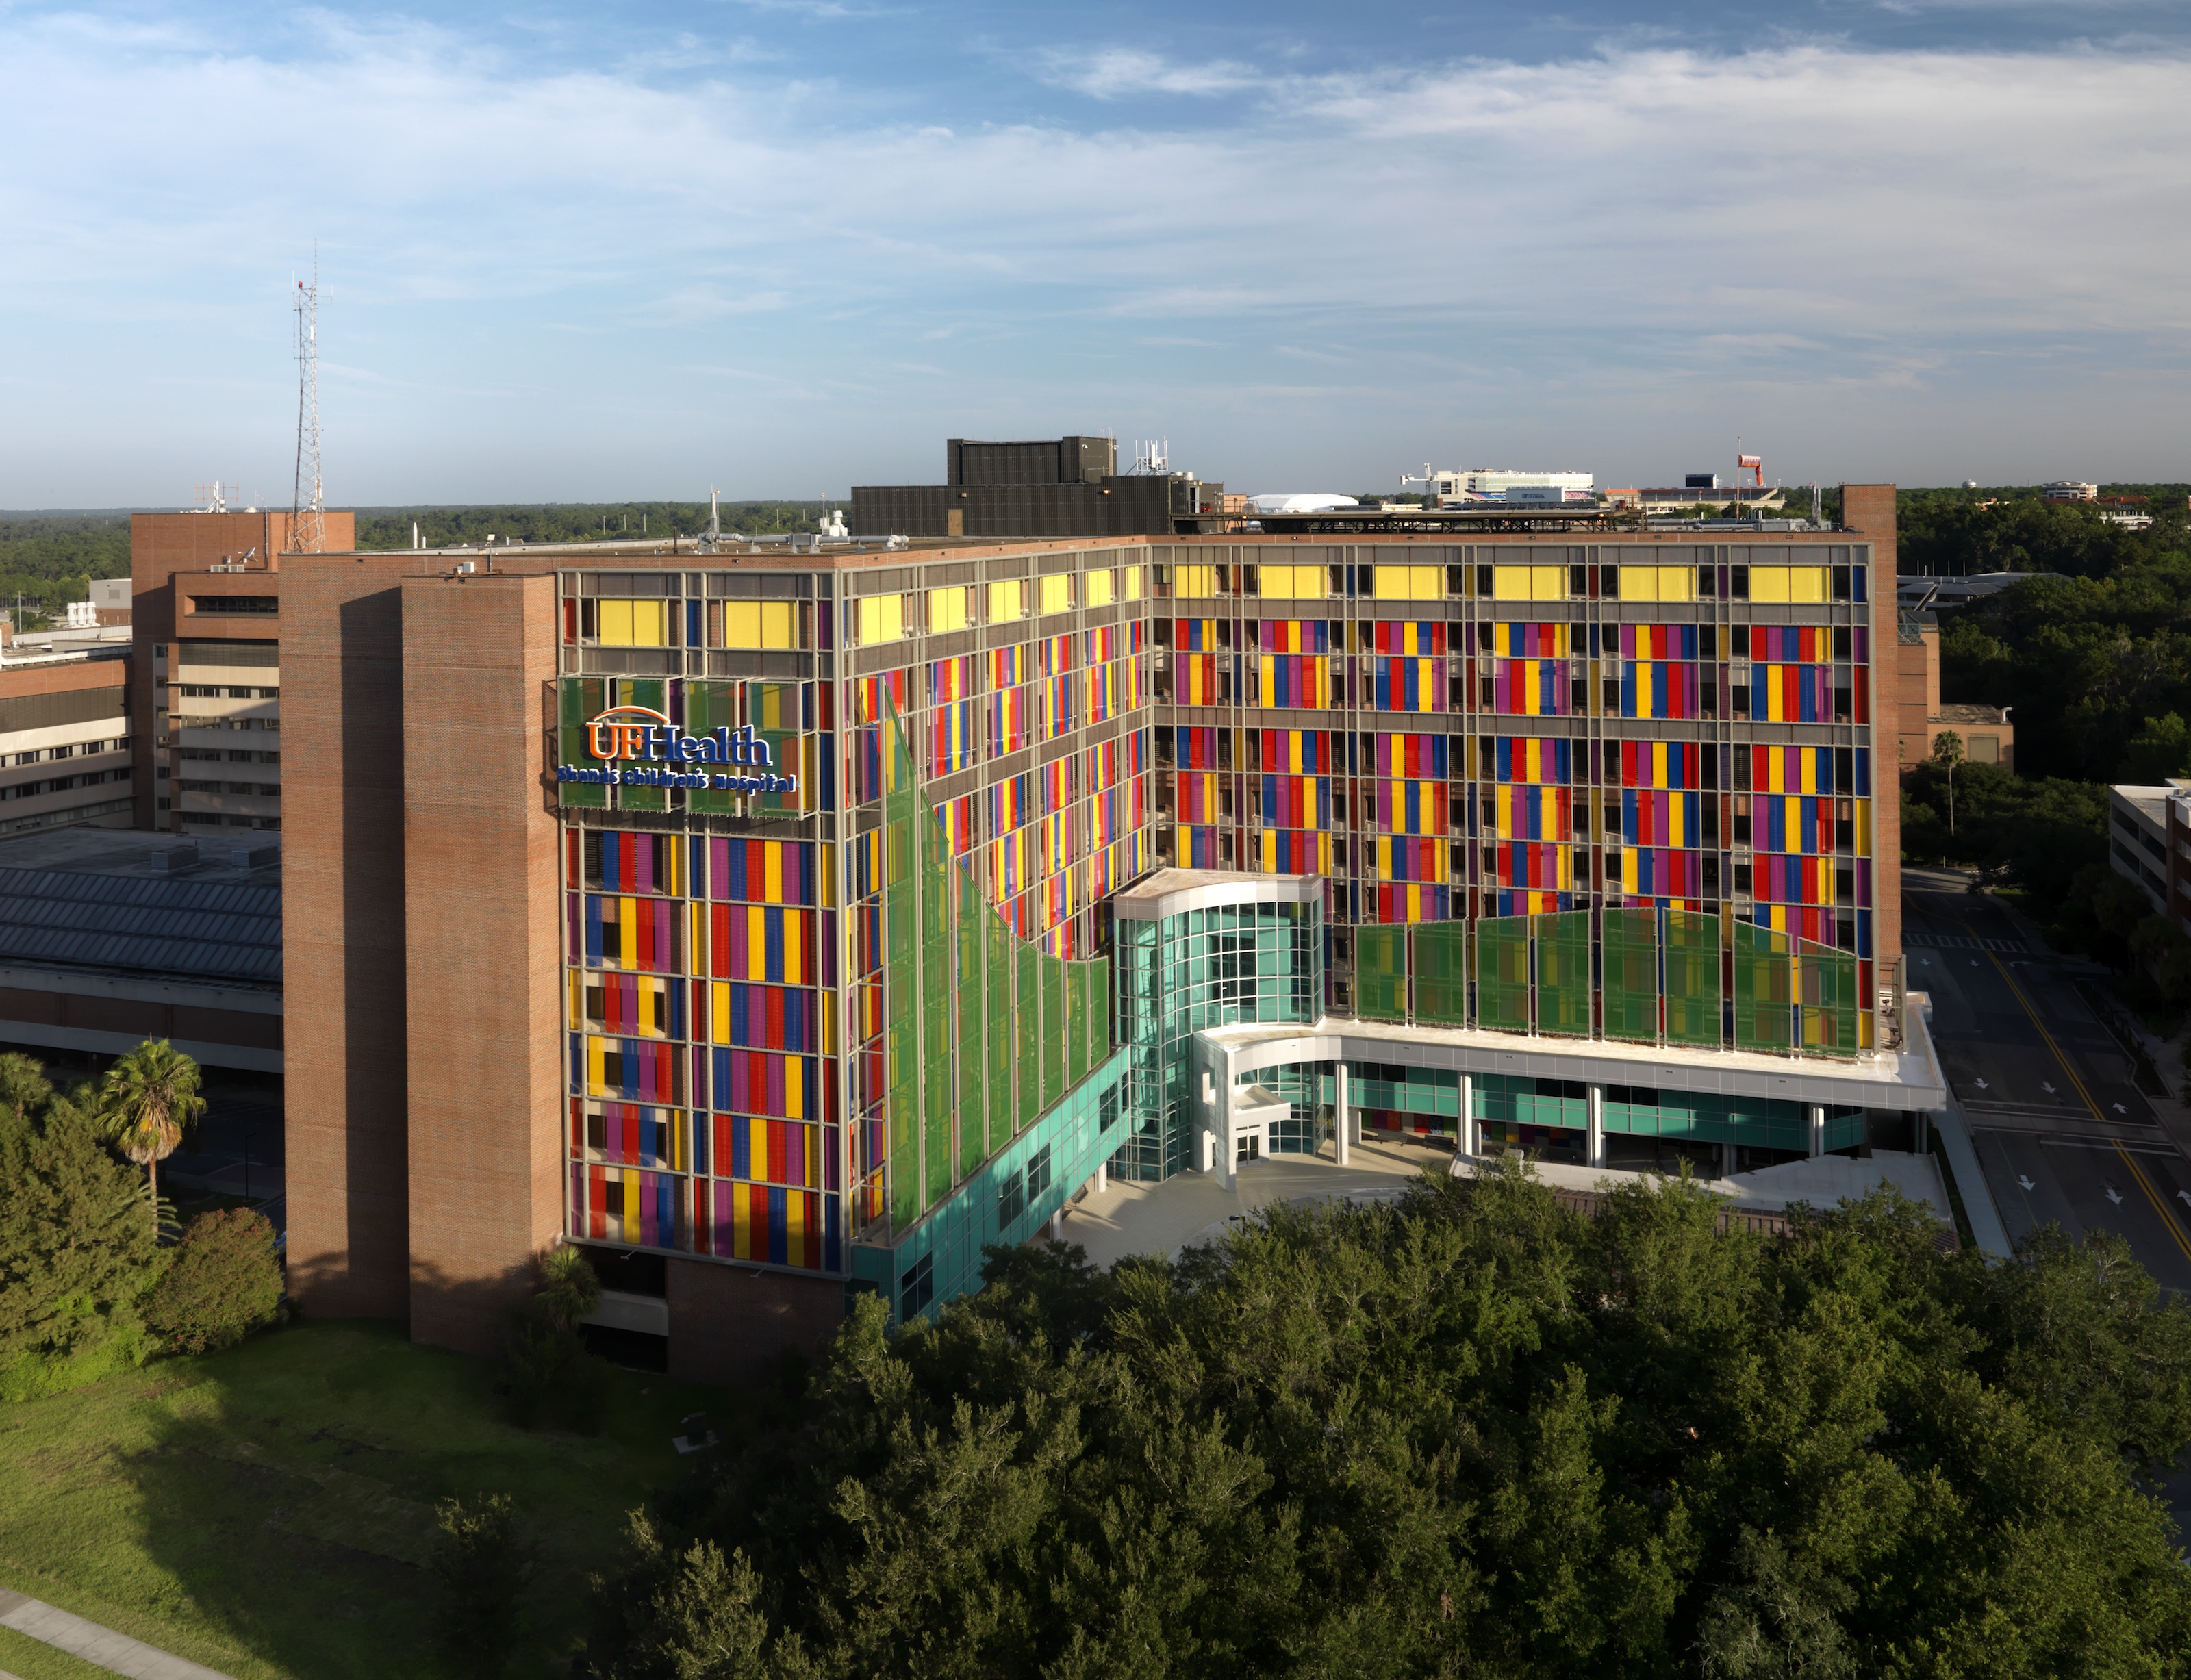 UF Health Shands Children's Hospital